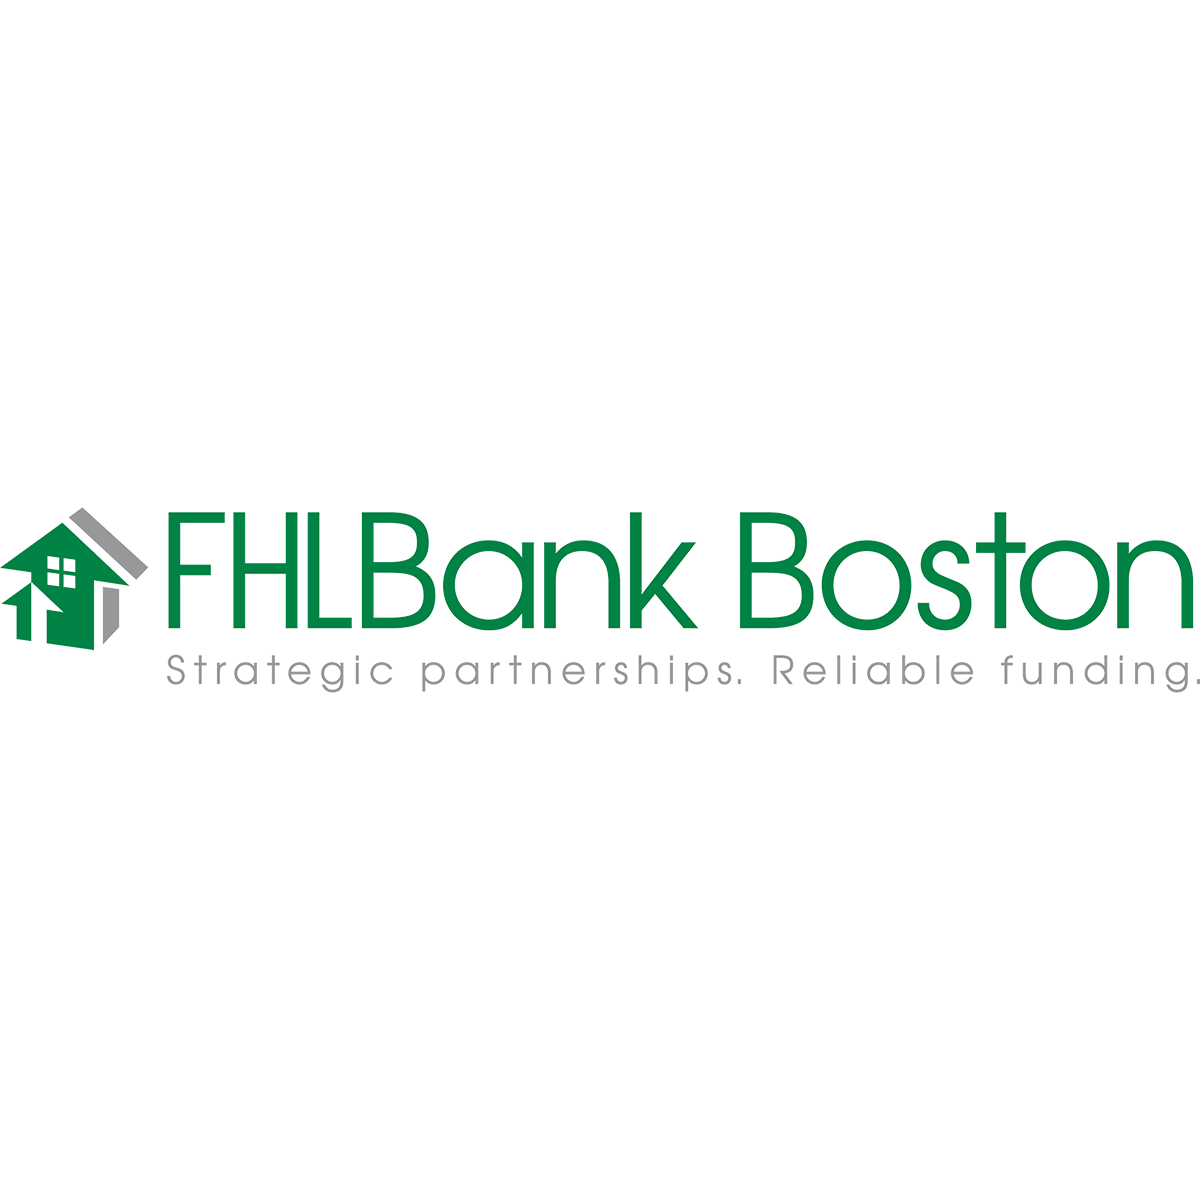 FHL Bank Boston